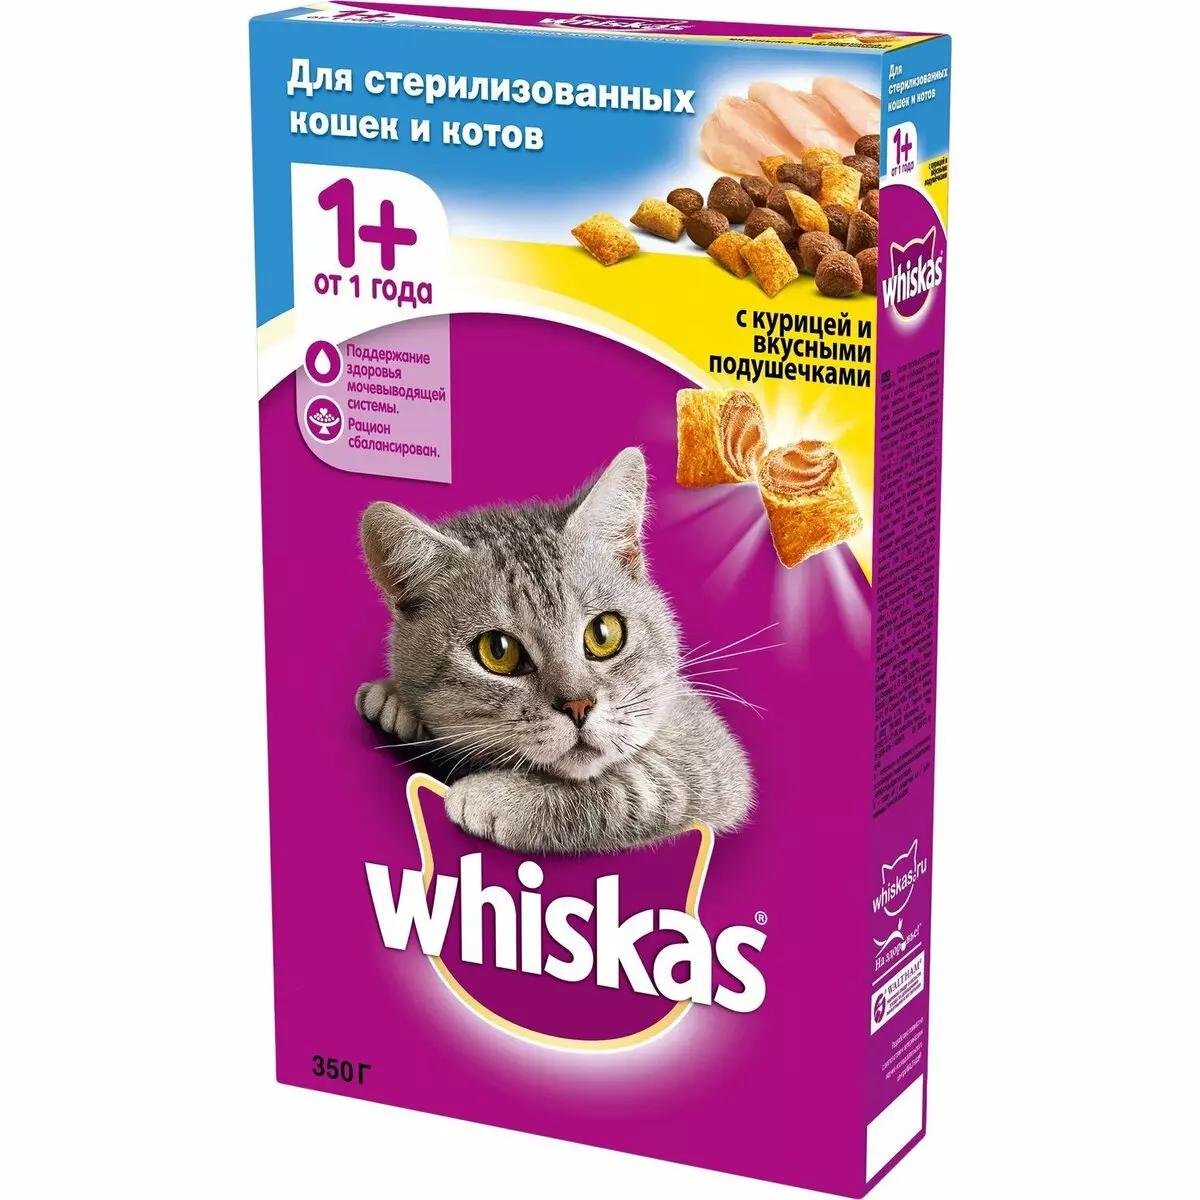 Whikas za sterilizirane mačke: Pregled suhih feedova za 5 kg za kastrirane mačke, drugi feed, recenzije 22643_4